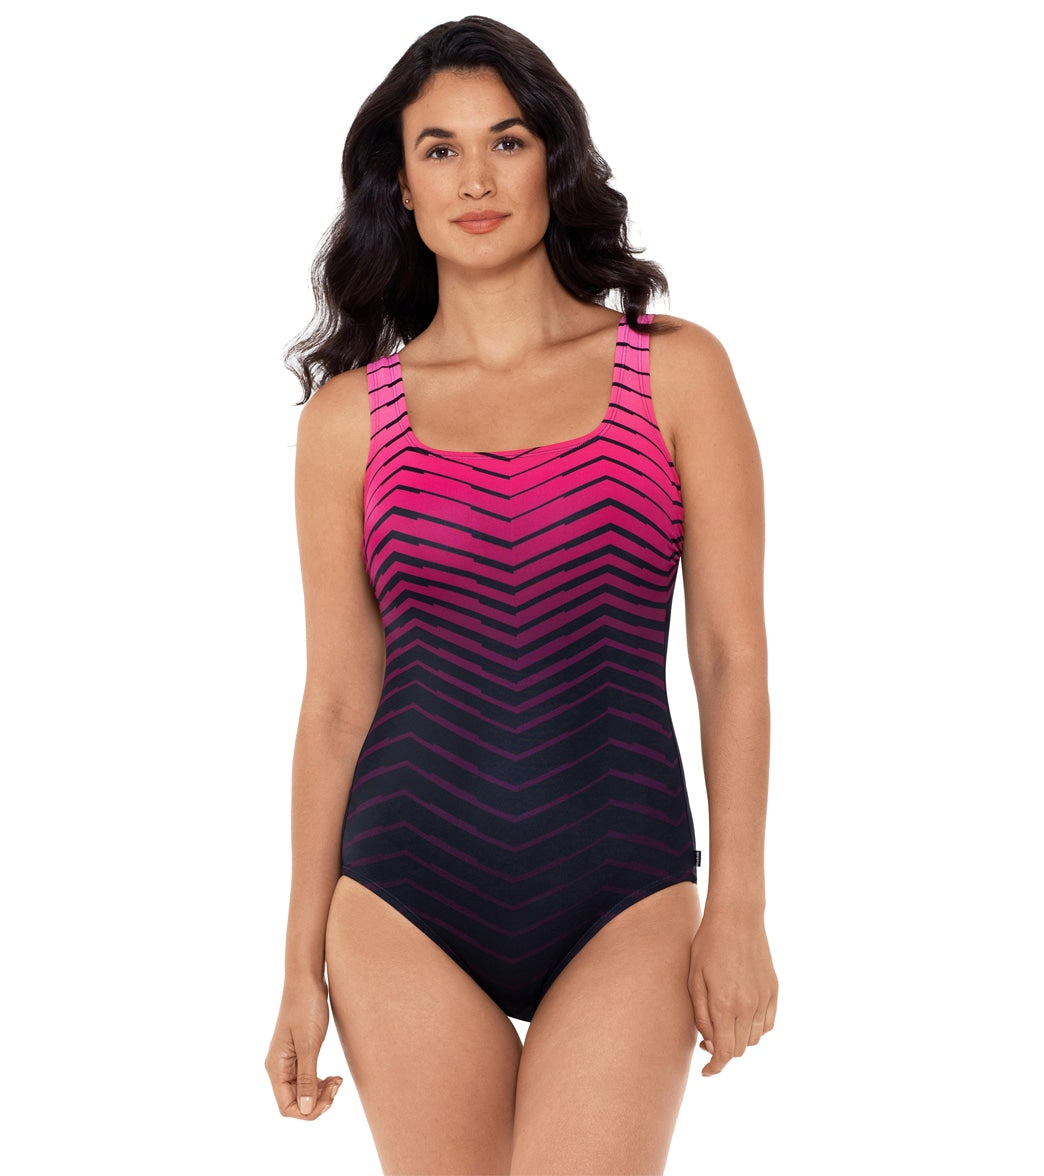 Reebok Women's Prime Performance Scoop Back Chlorine Resistant One Piece Swimsuit - Pink/Black 8 Nylon/Spandex - Swimoutlet.com